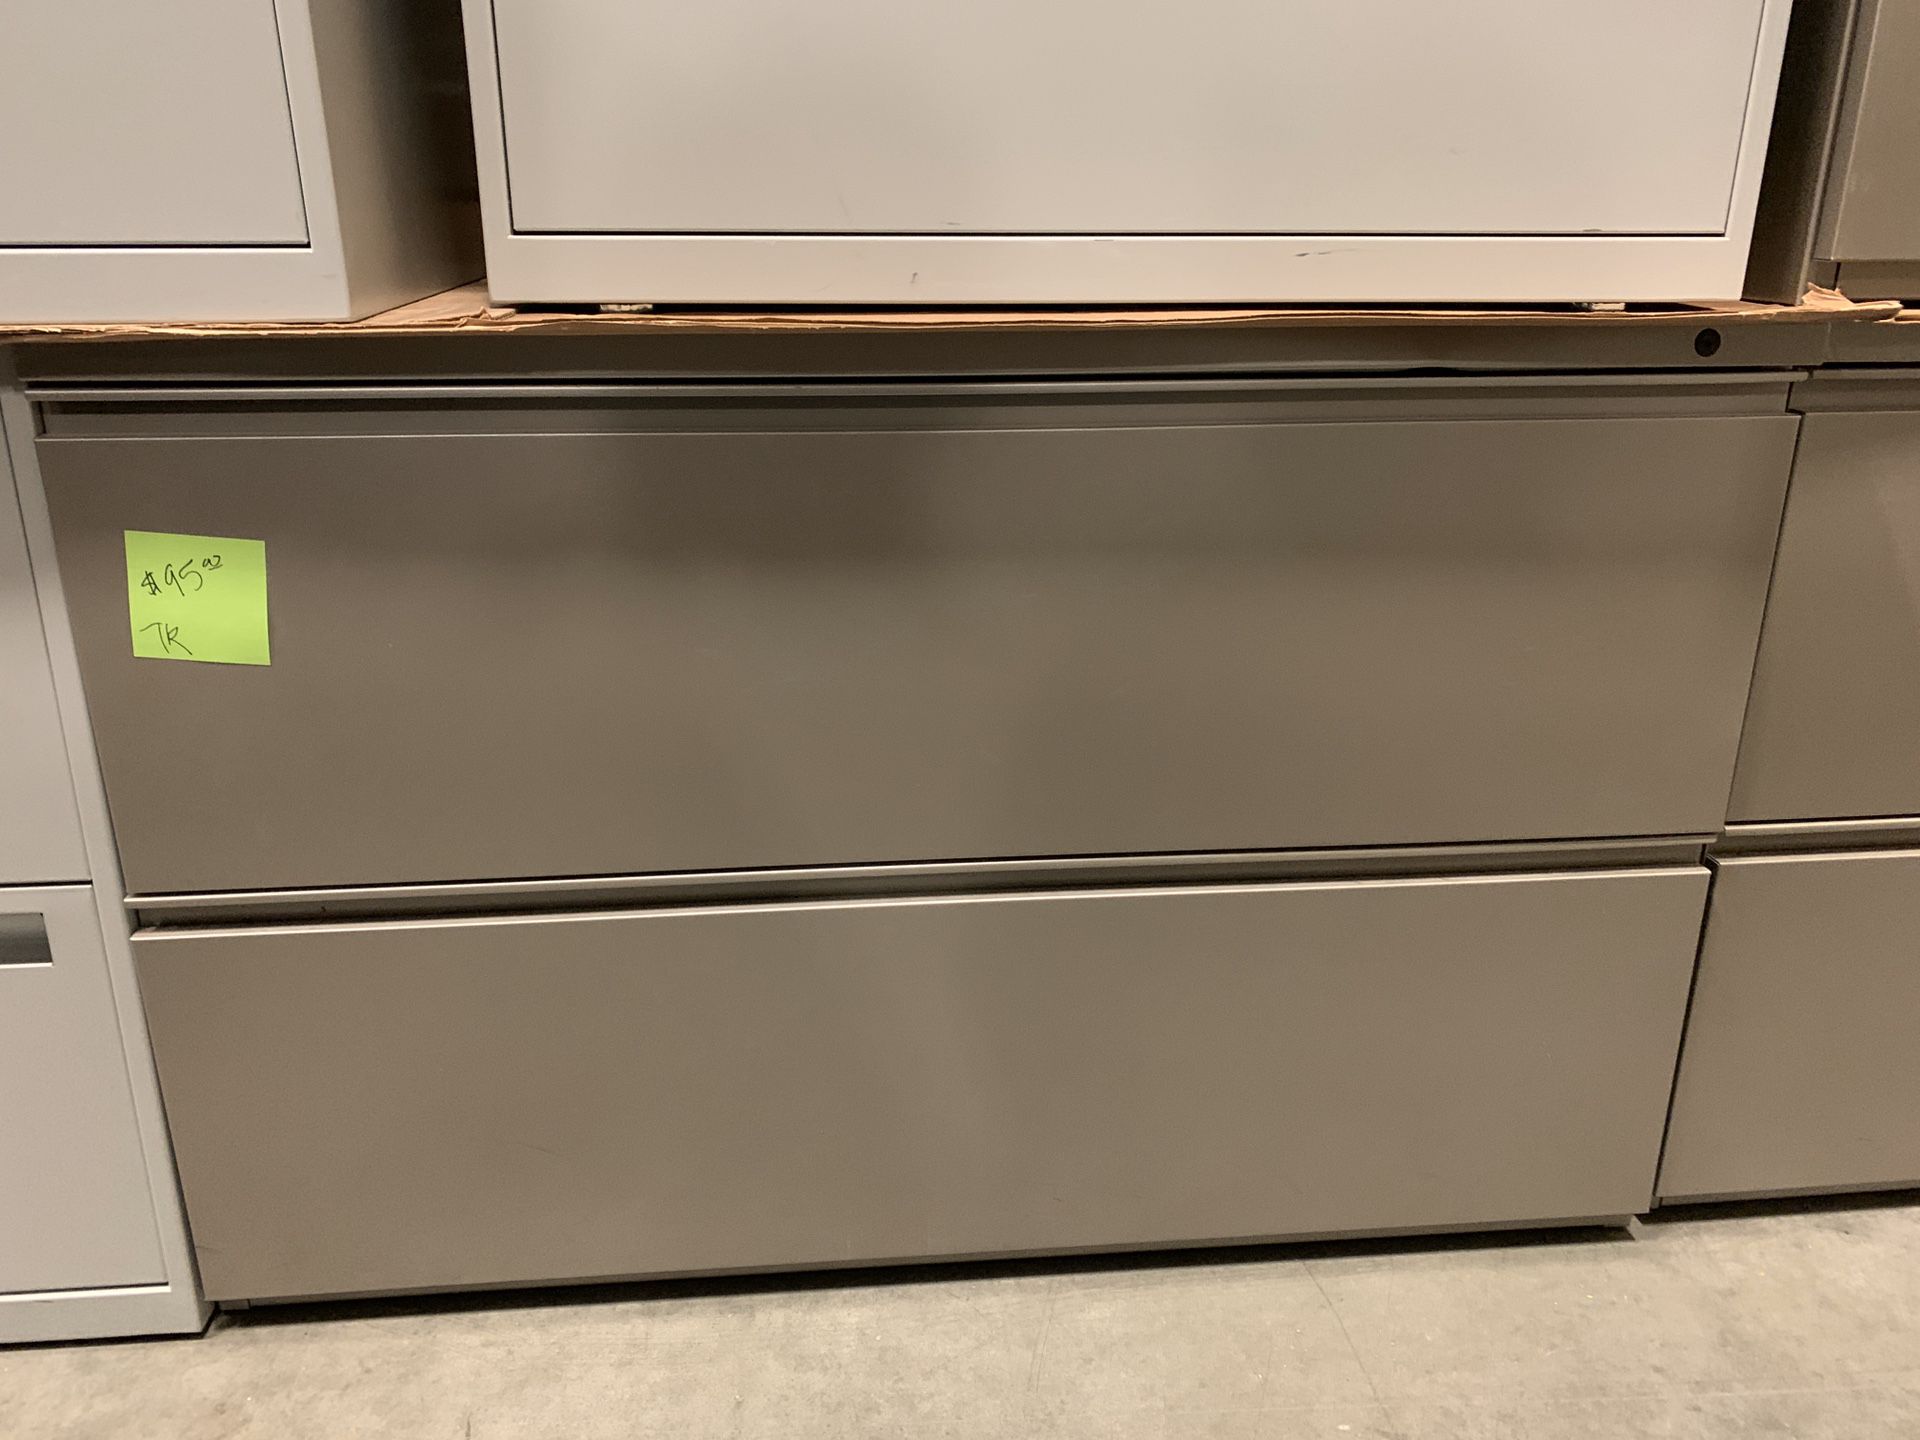 Herman Miller 42” lateral filing cabinet